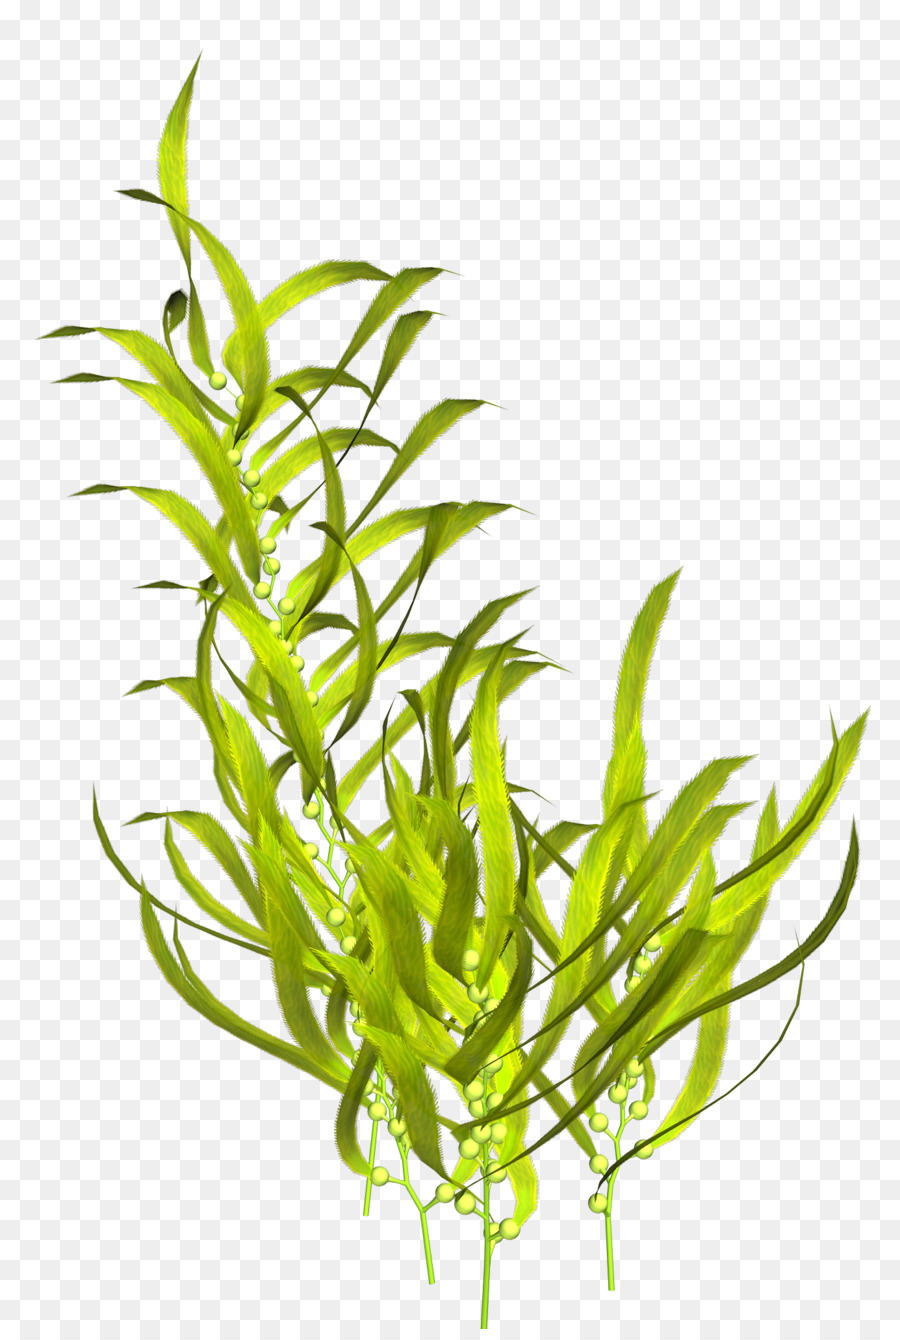 Seaweed Aquatic Plants Clip art - coral png download - 1385*2045 - Free Transparent Seaweed png Download.